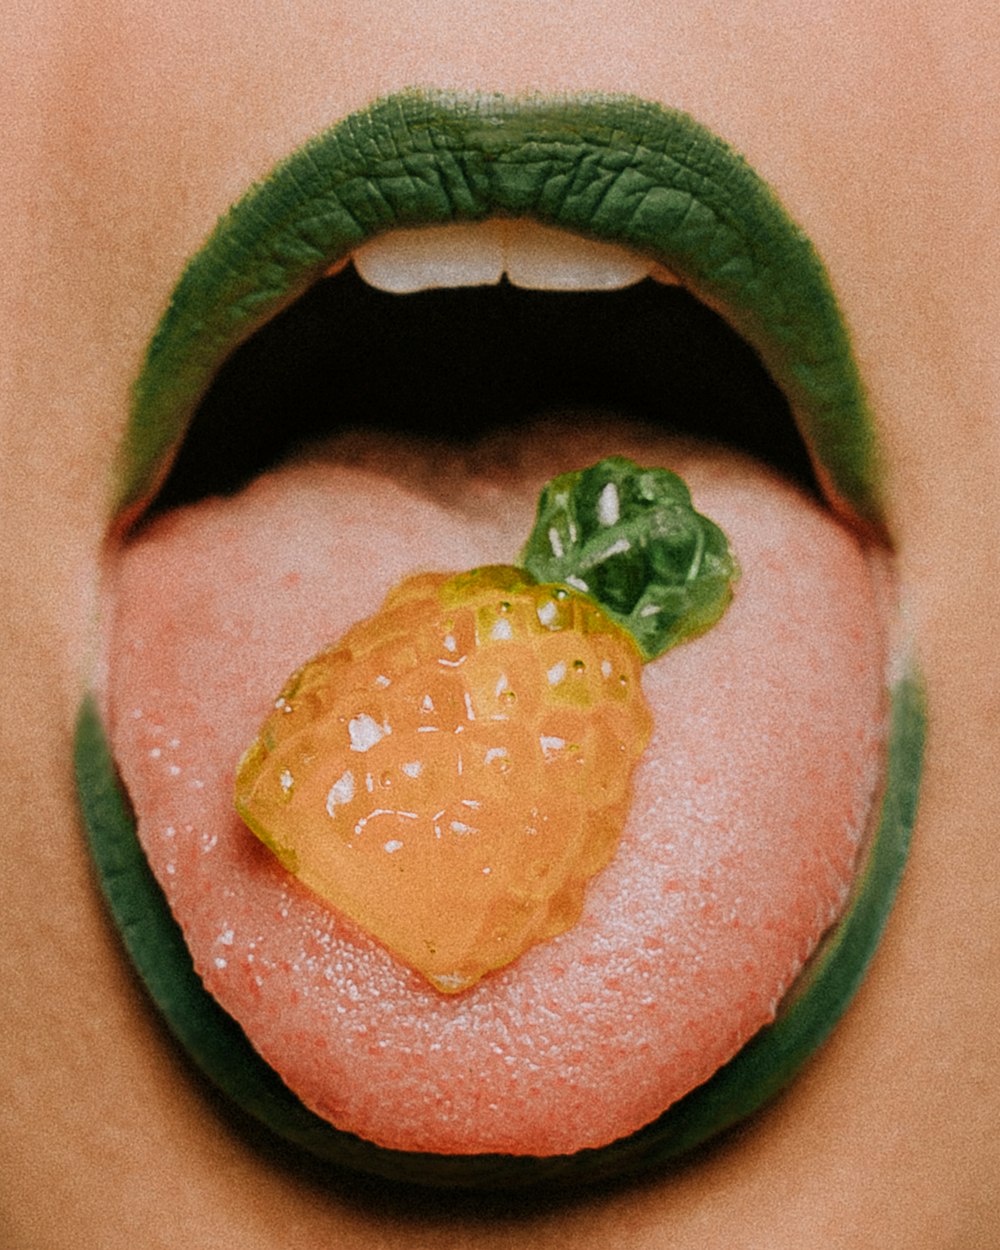 persona mostrando la lengua con caramelo de piña